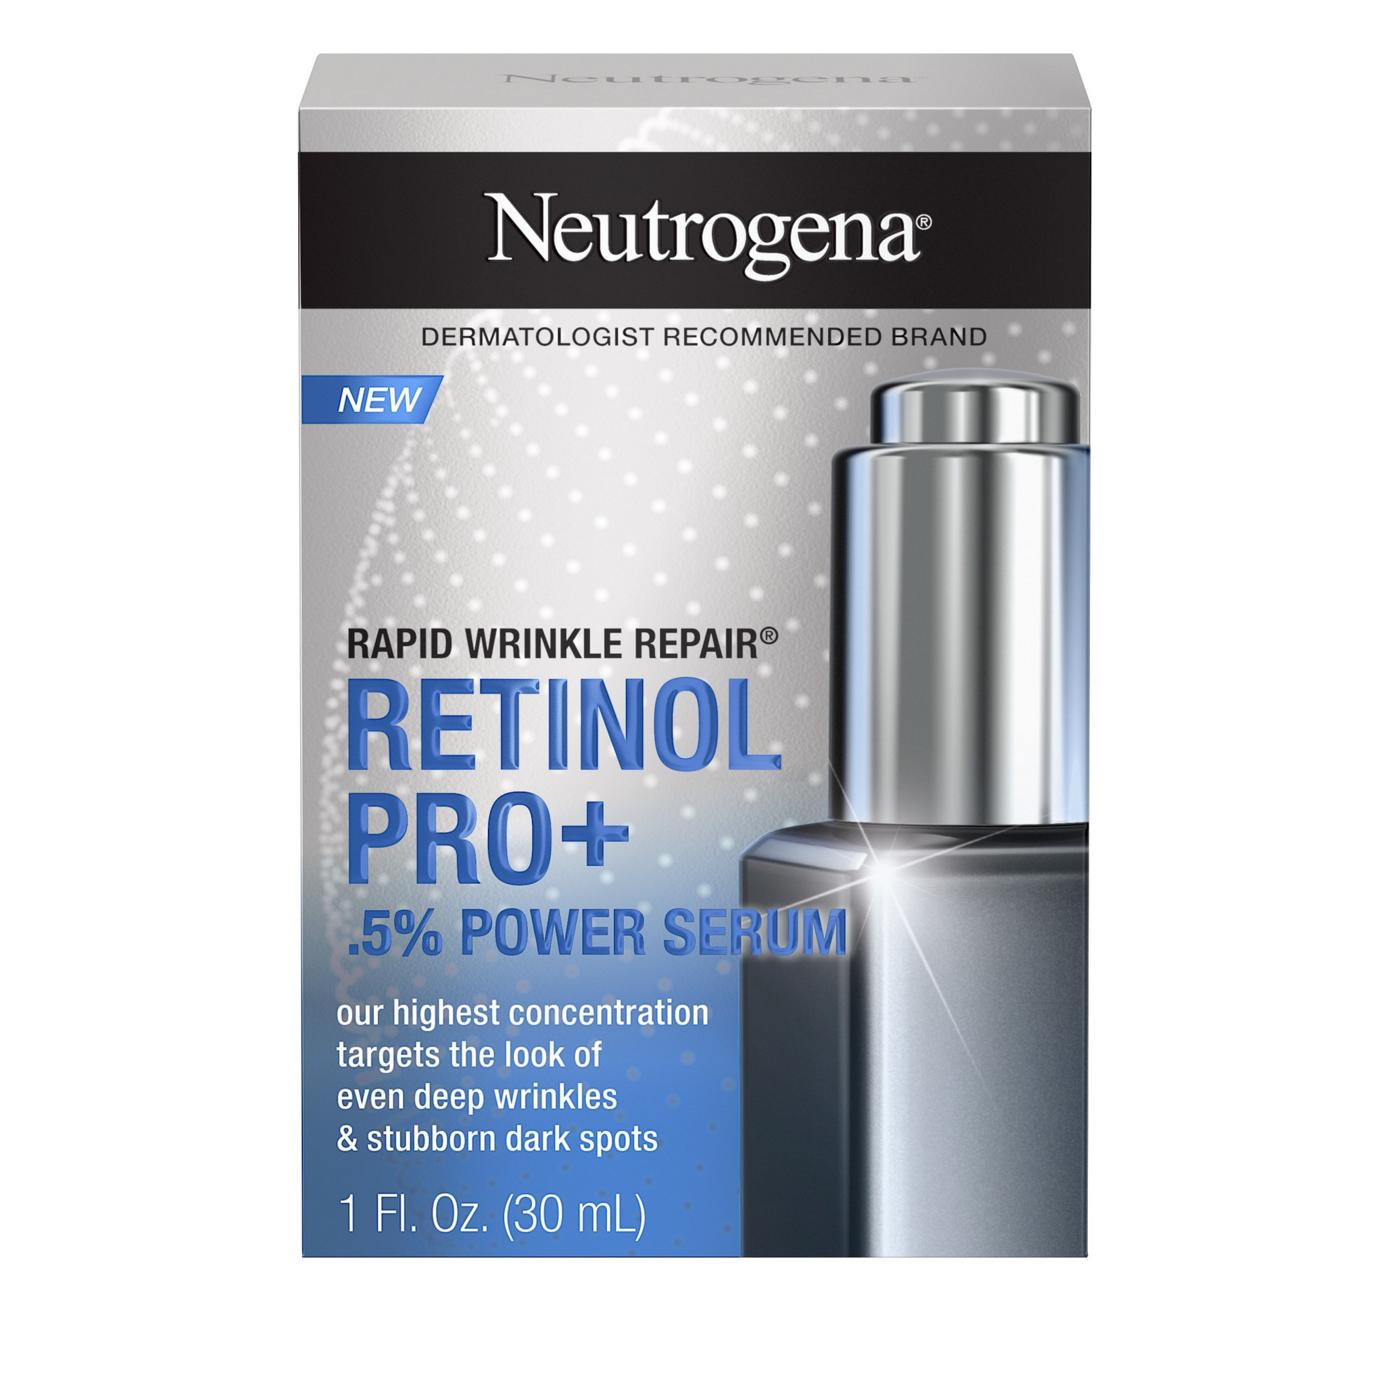 Neutrogena Rapid Wrinkle Repair Retinol Pro+ .5% Power Serum; image 1 of 5